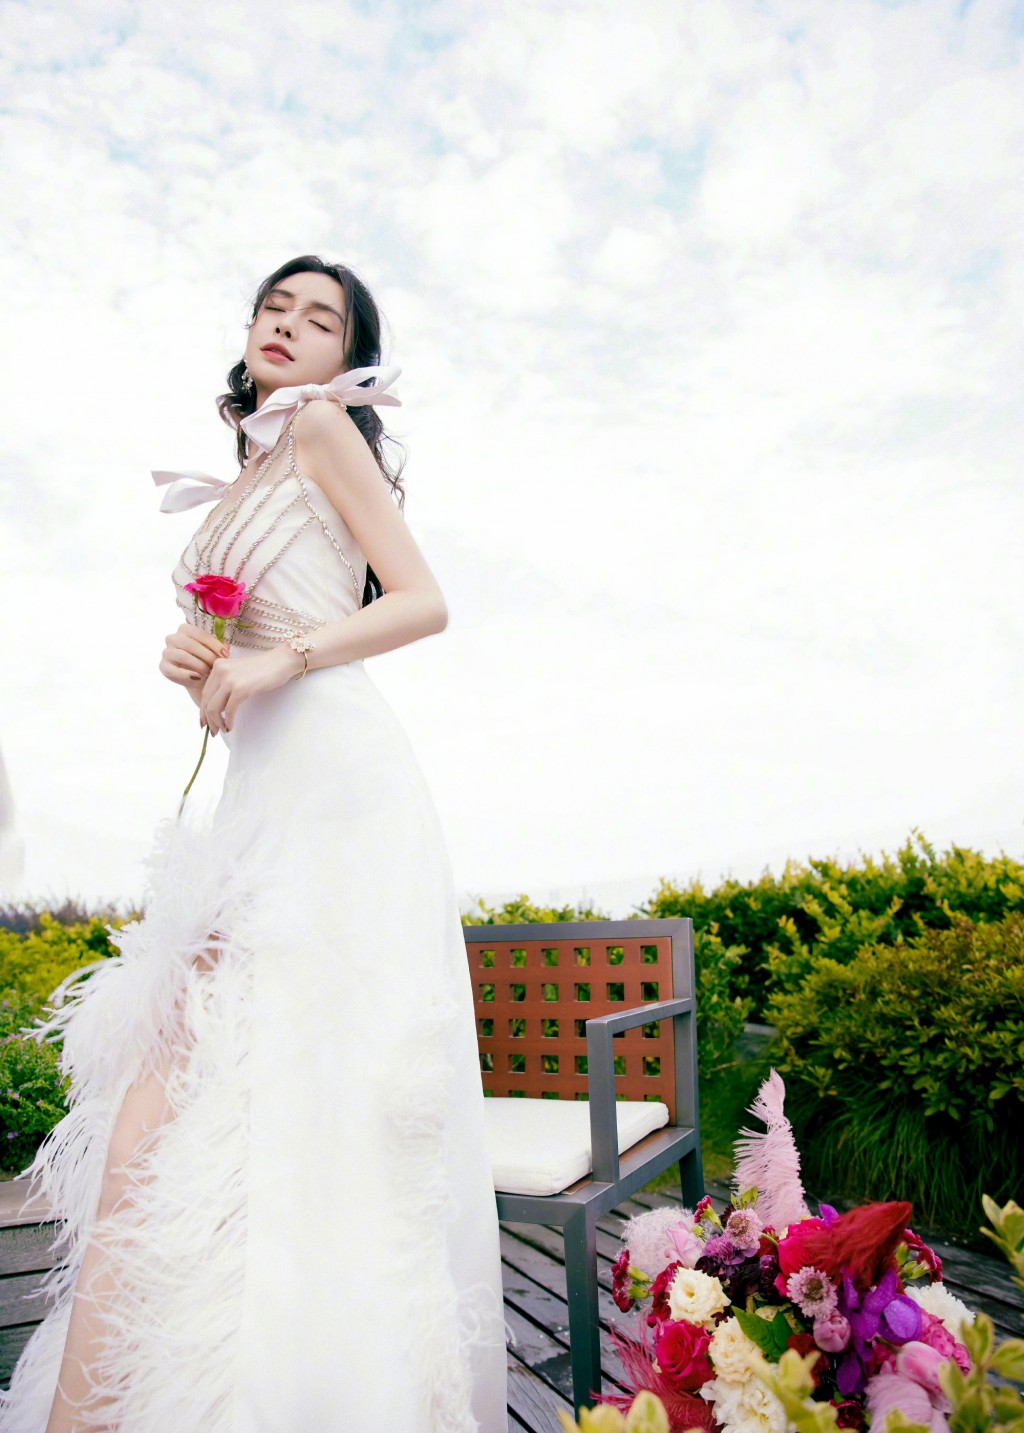 angelababy白色高定礼服精致优雅浪漫格调写真图片